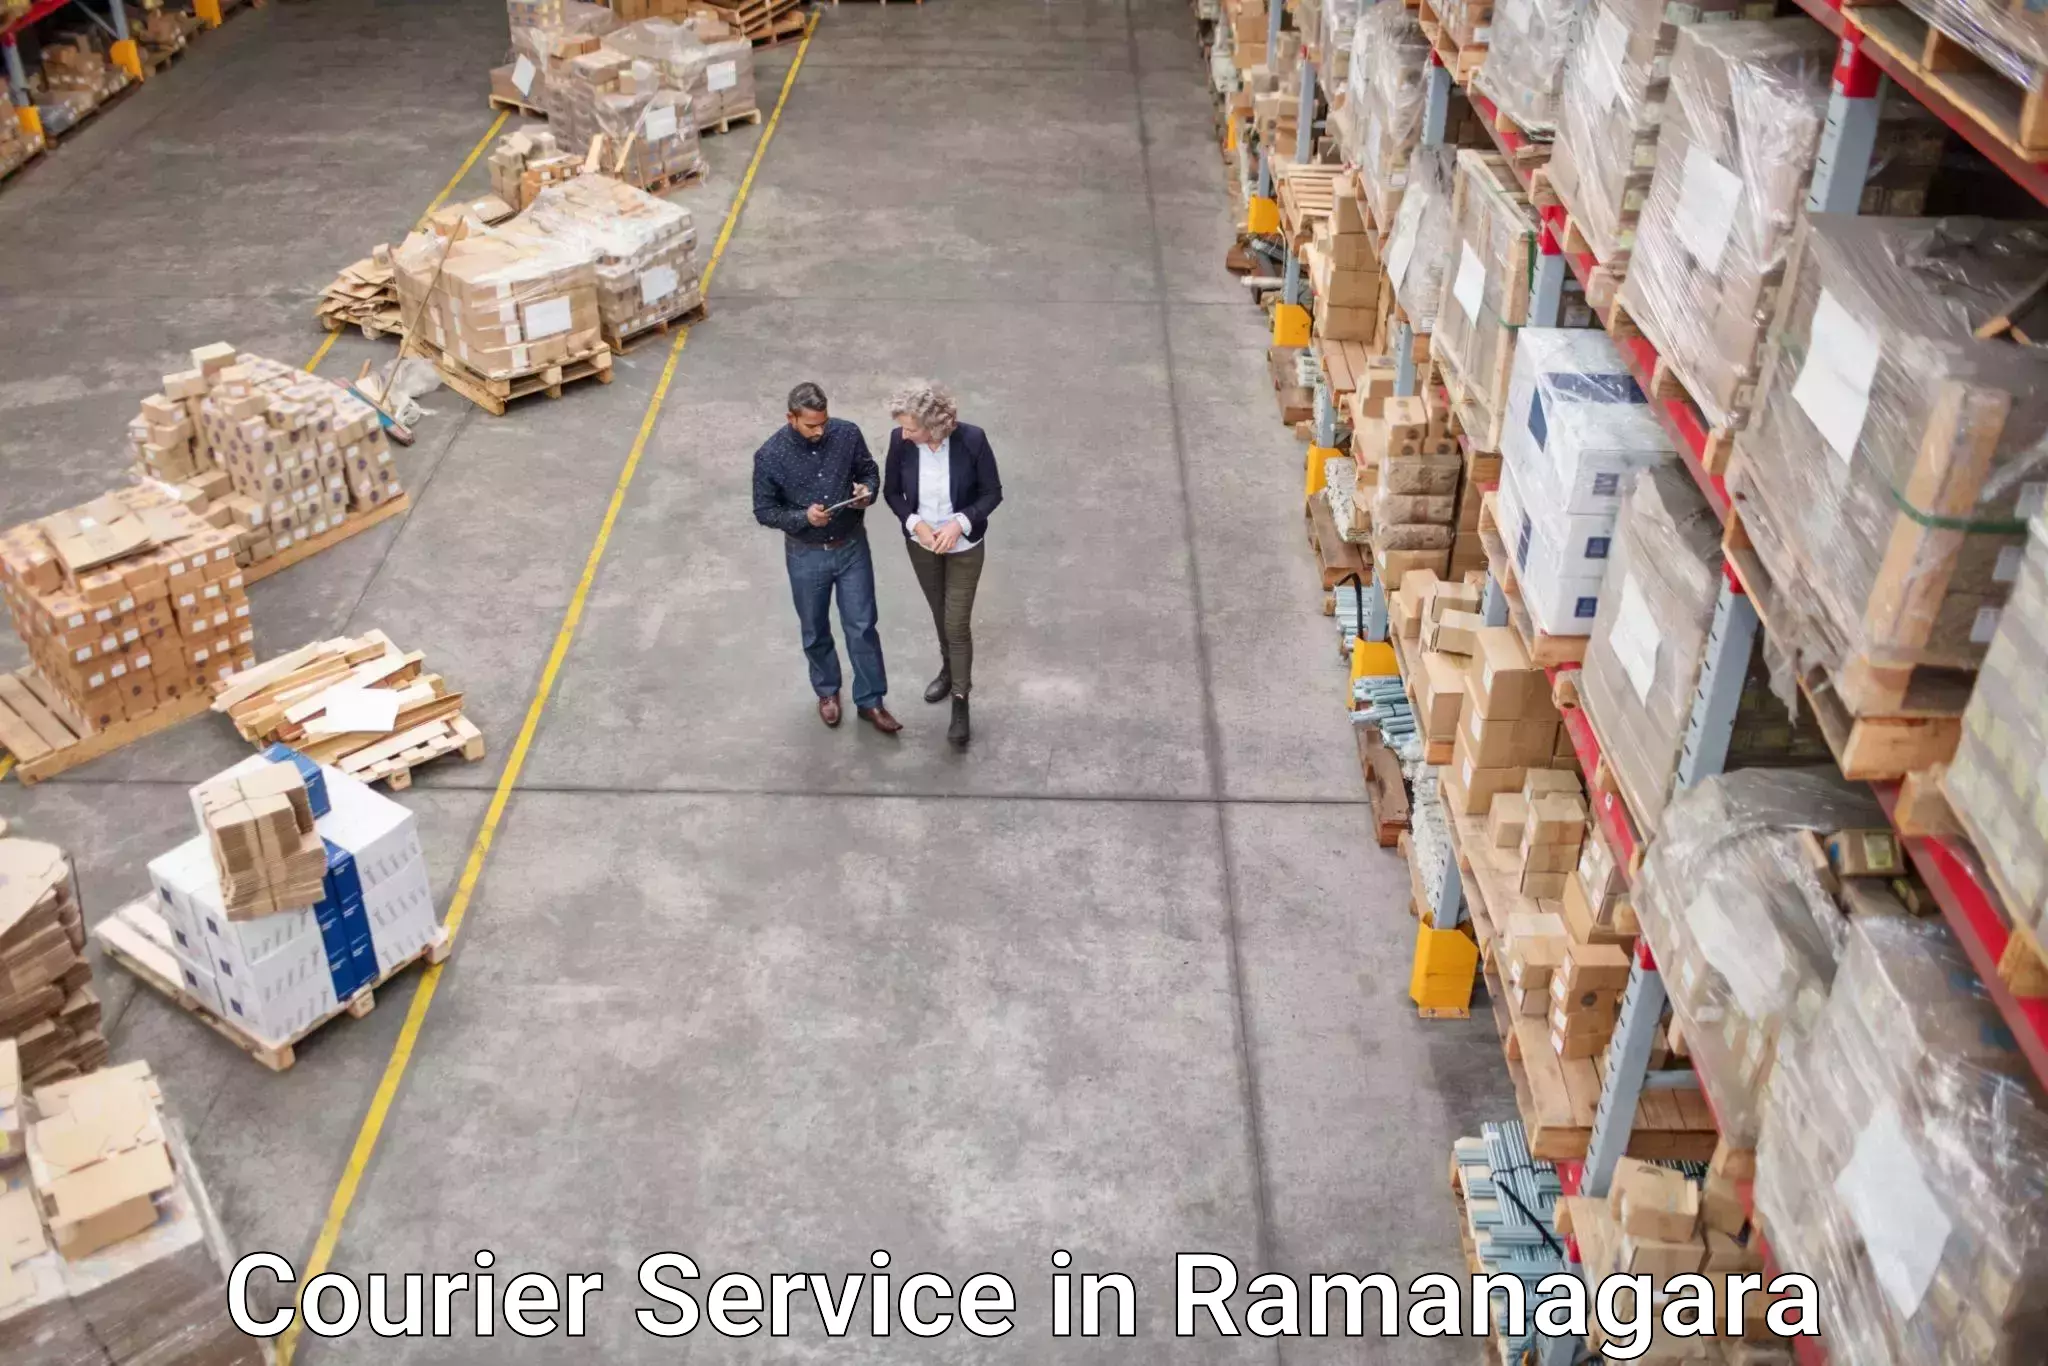 Personal courier services in Ramanagara